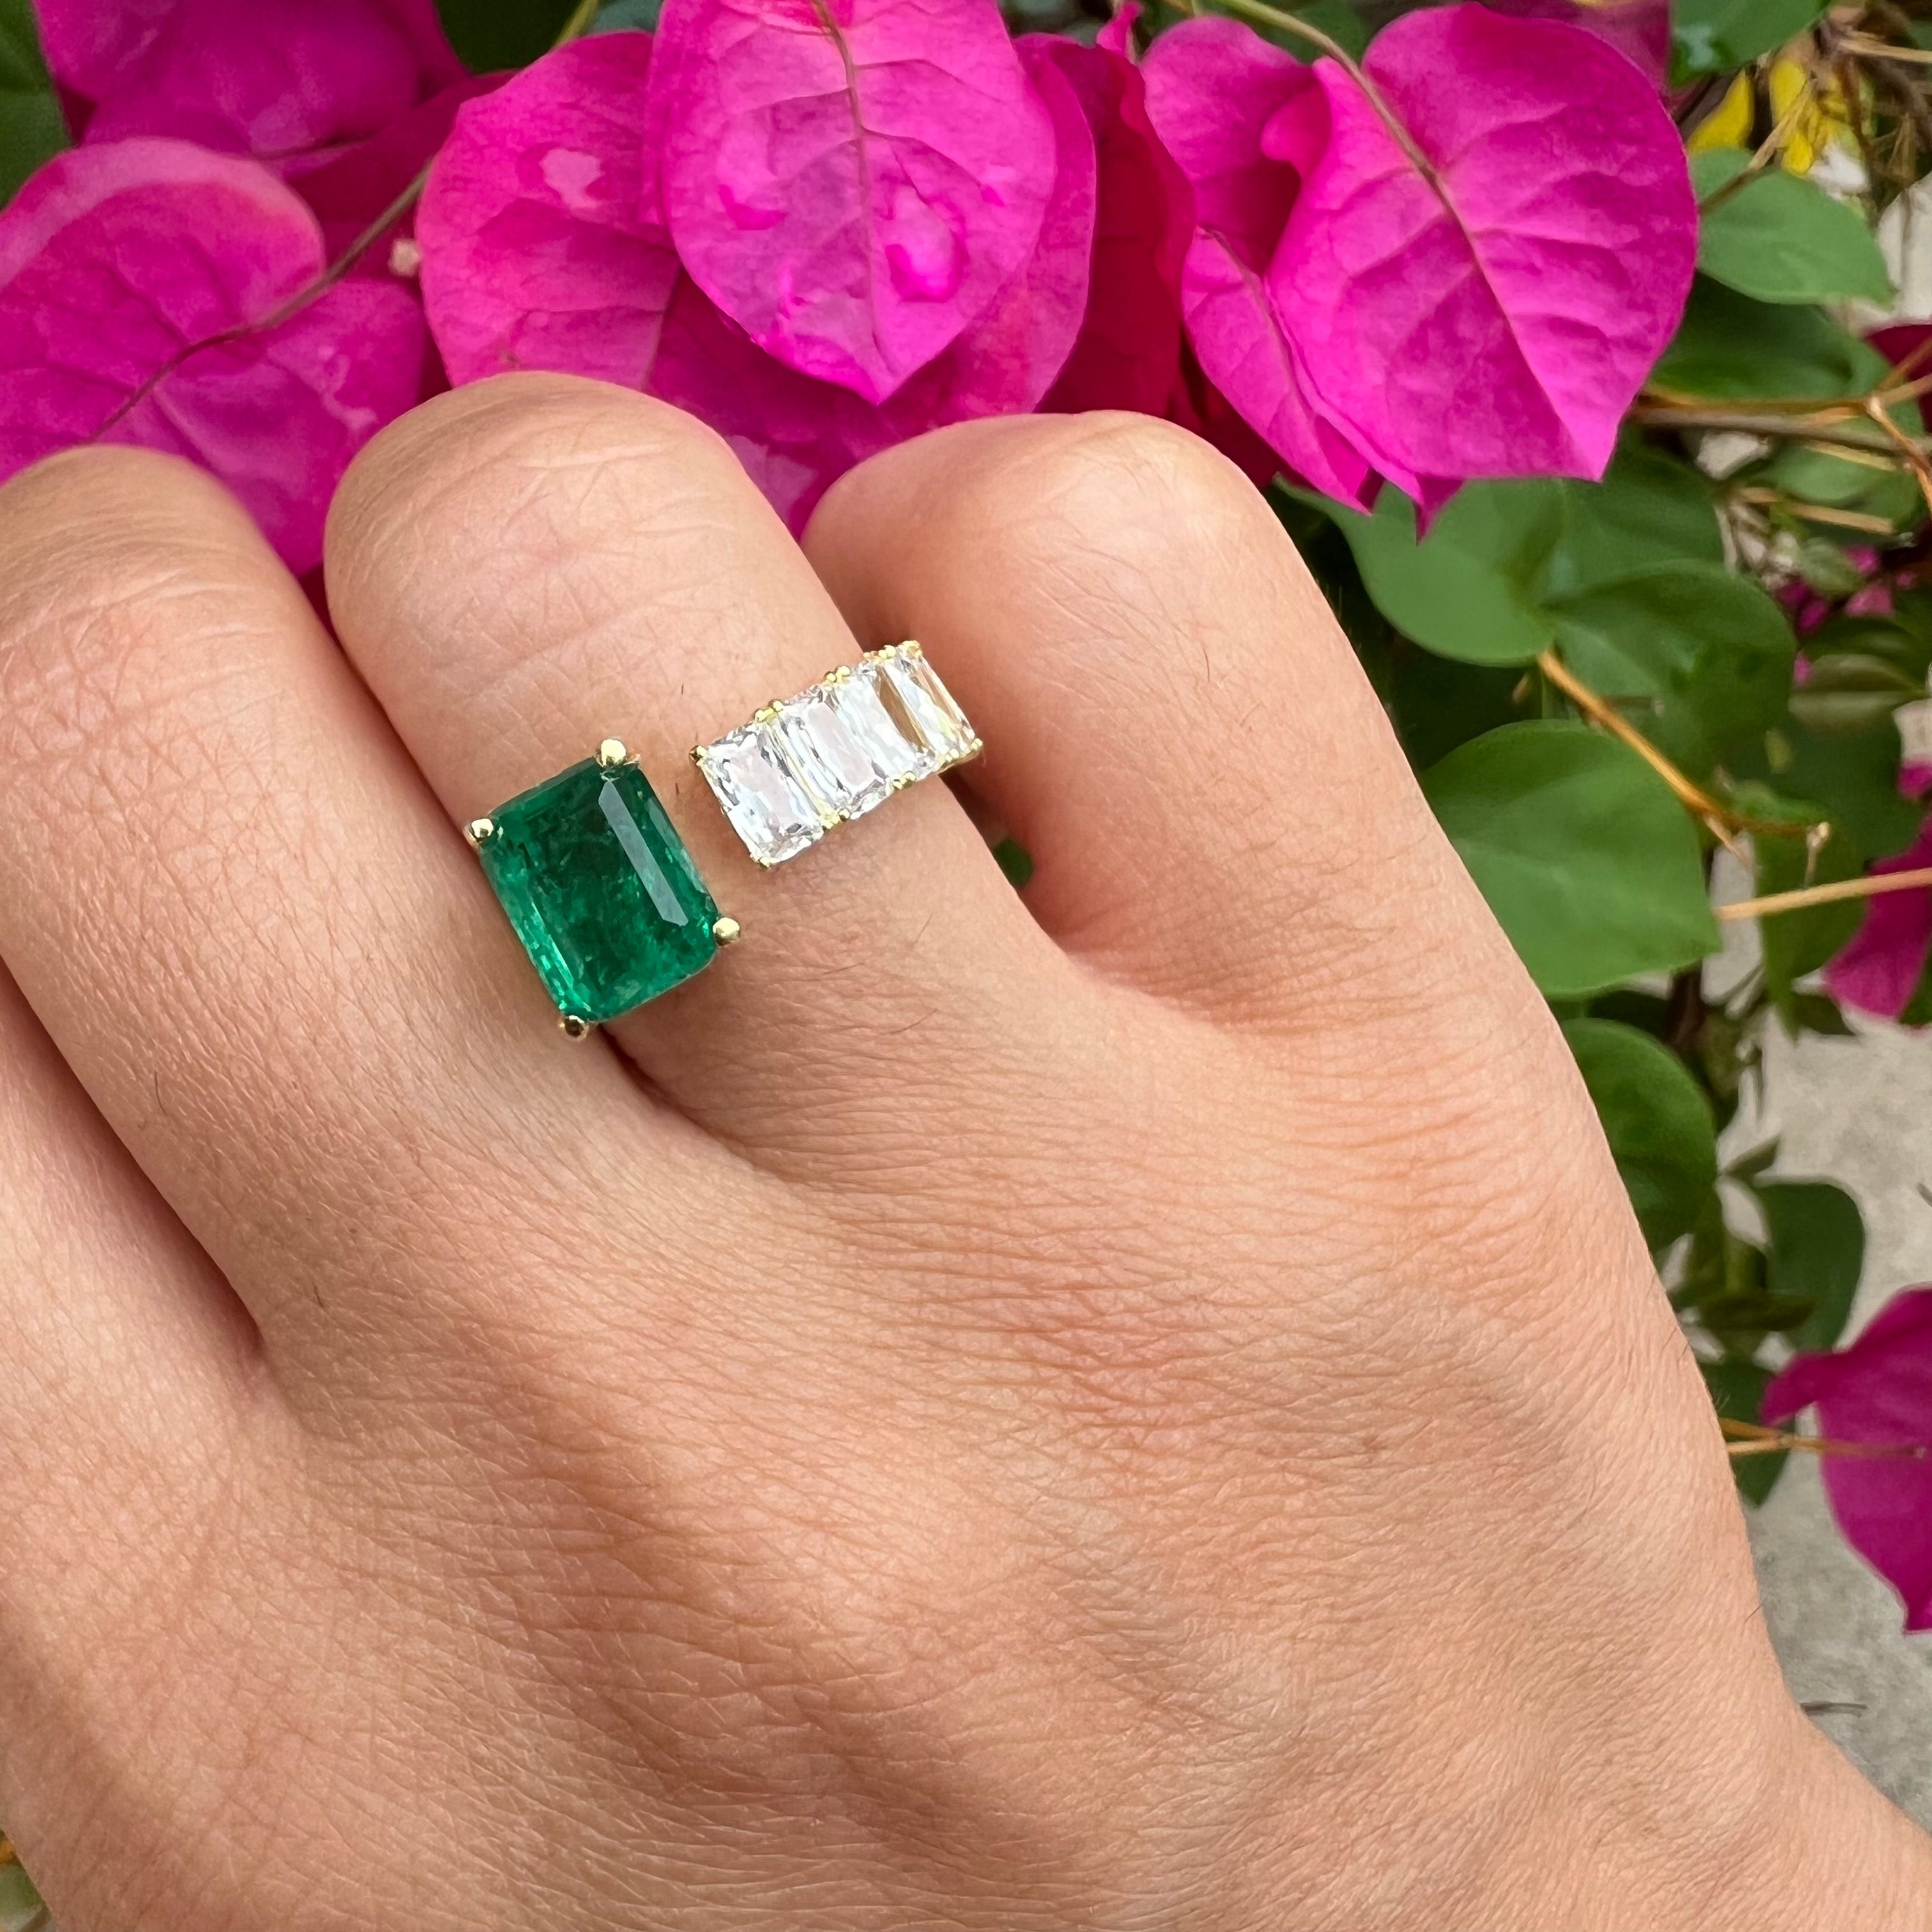 Silver gold plated emerald cut & cz emerald ring